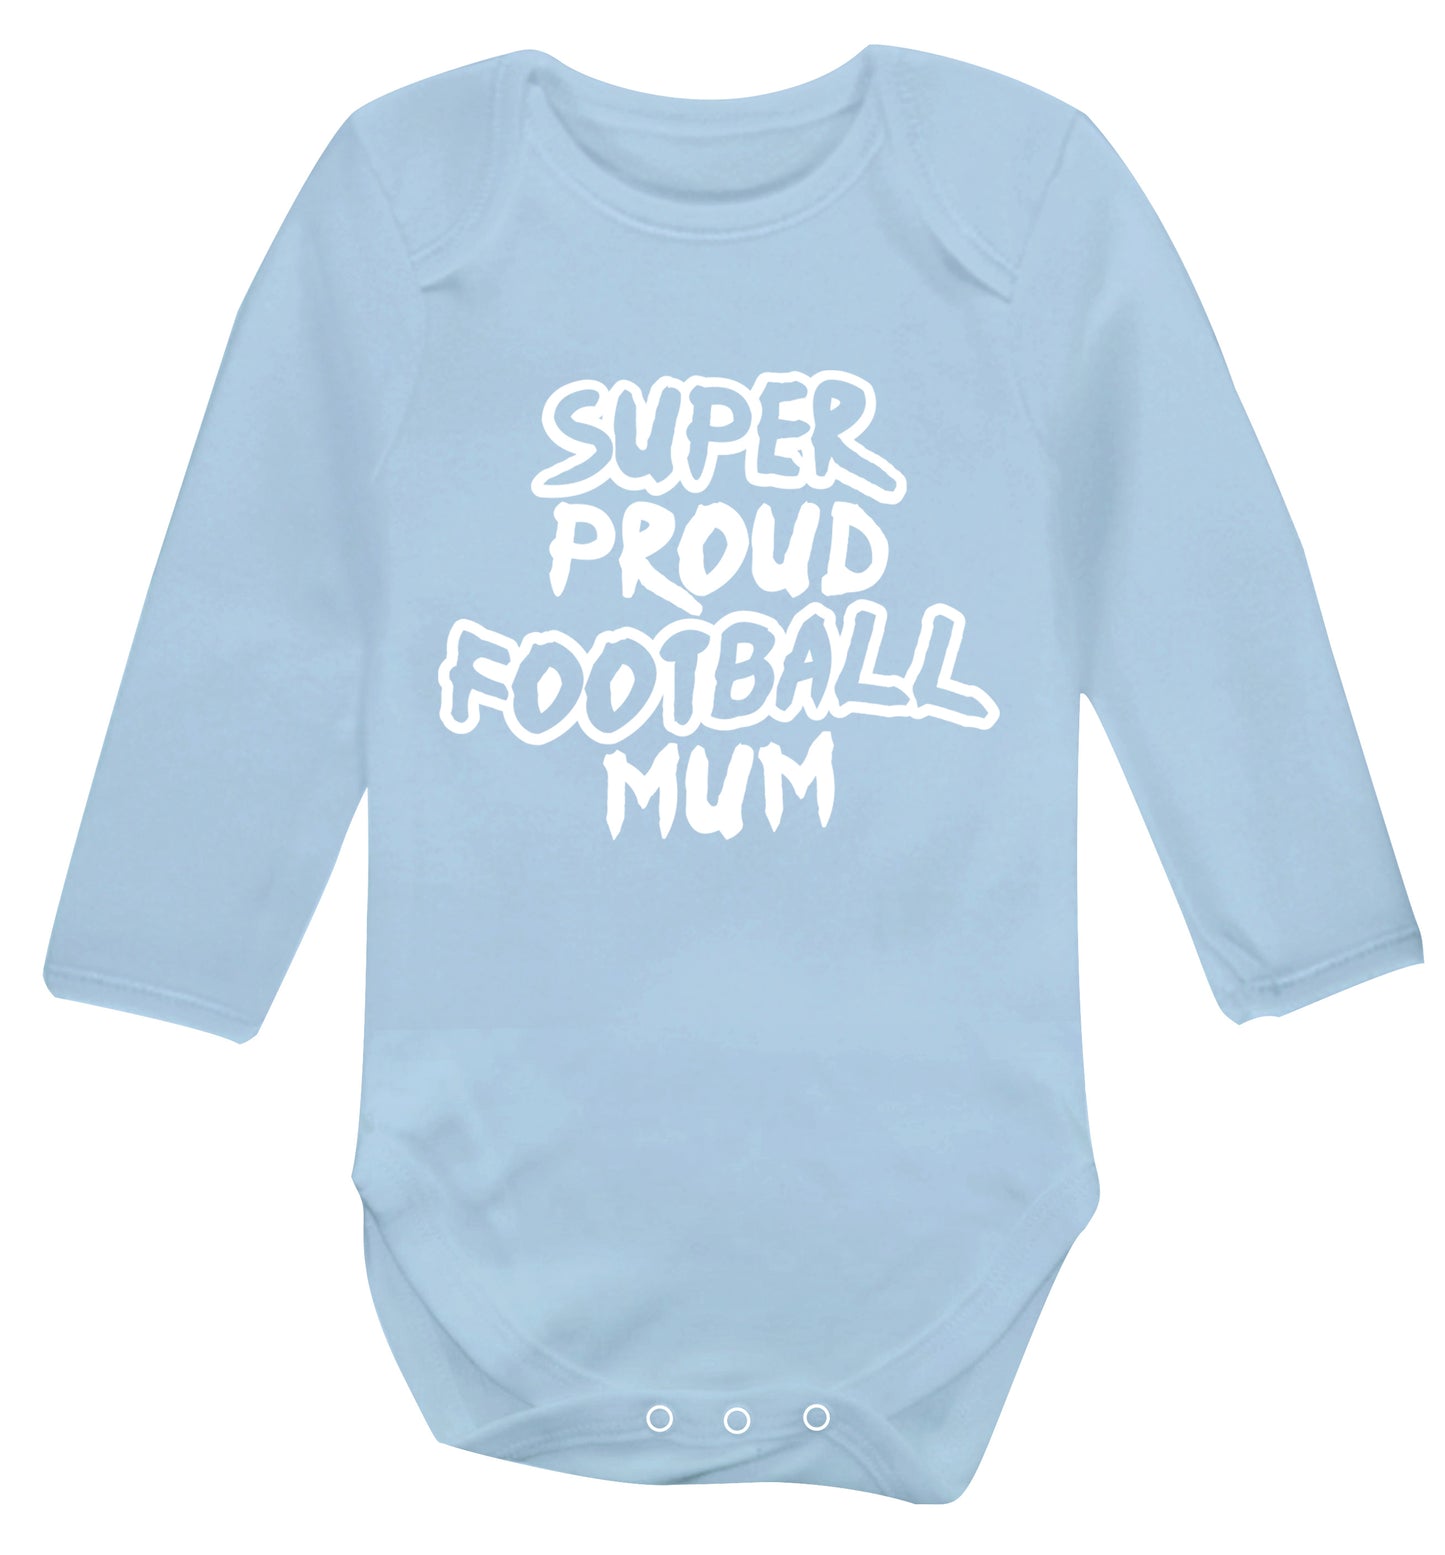 Super proud football mum Baby Vest long sleeved pale blue 6-12 months